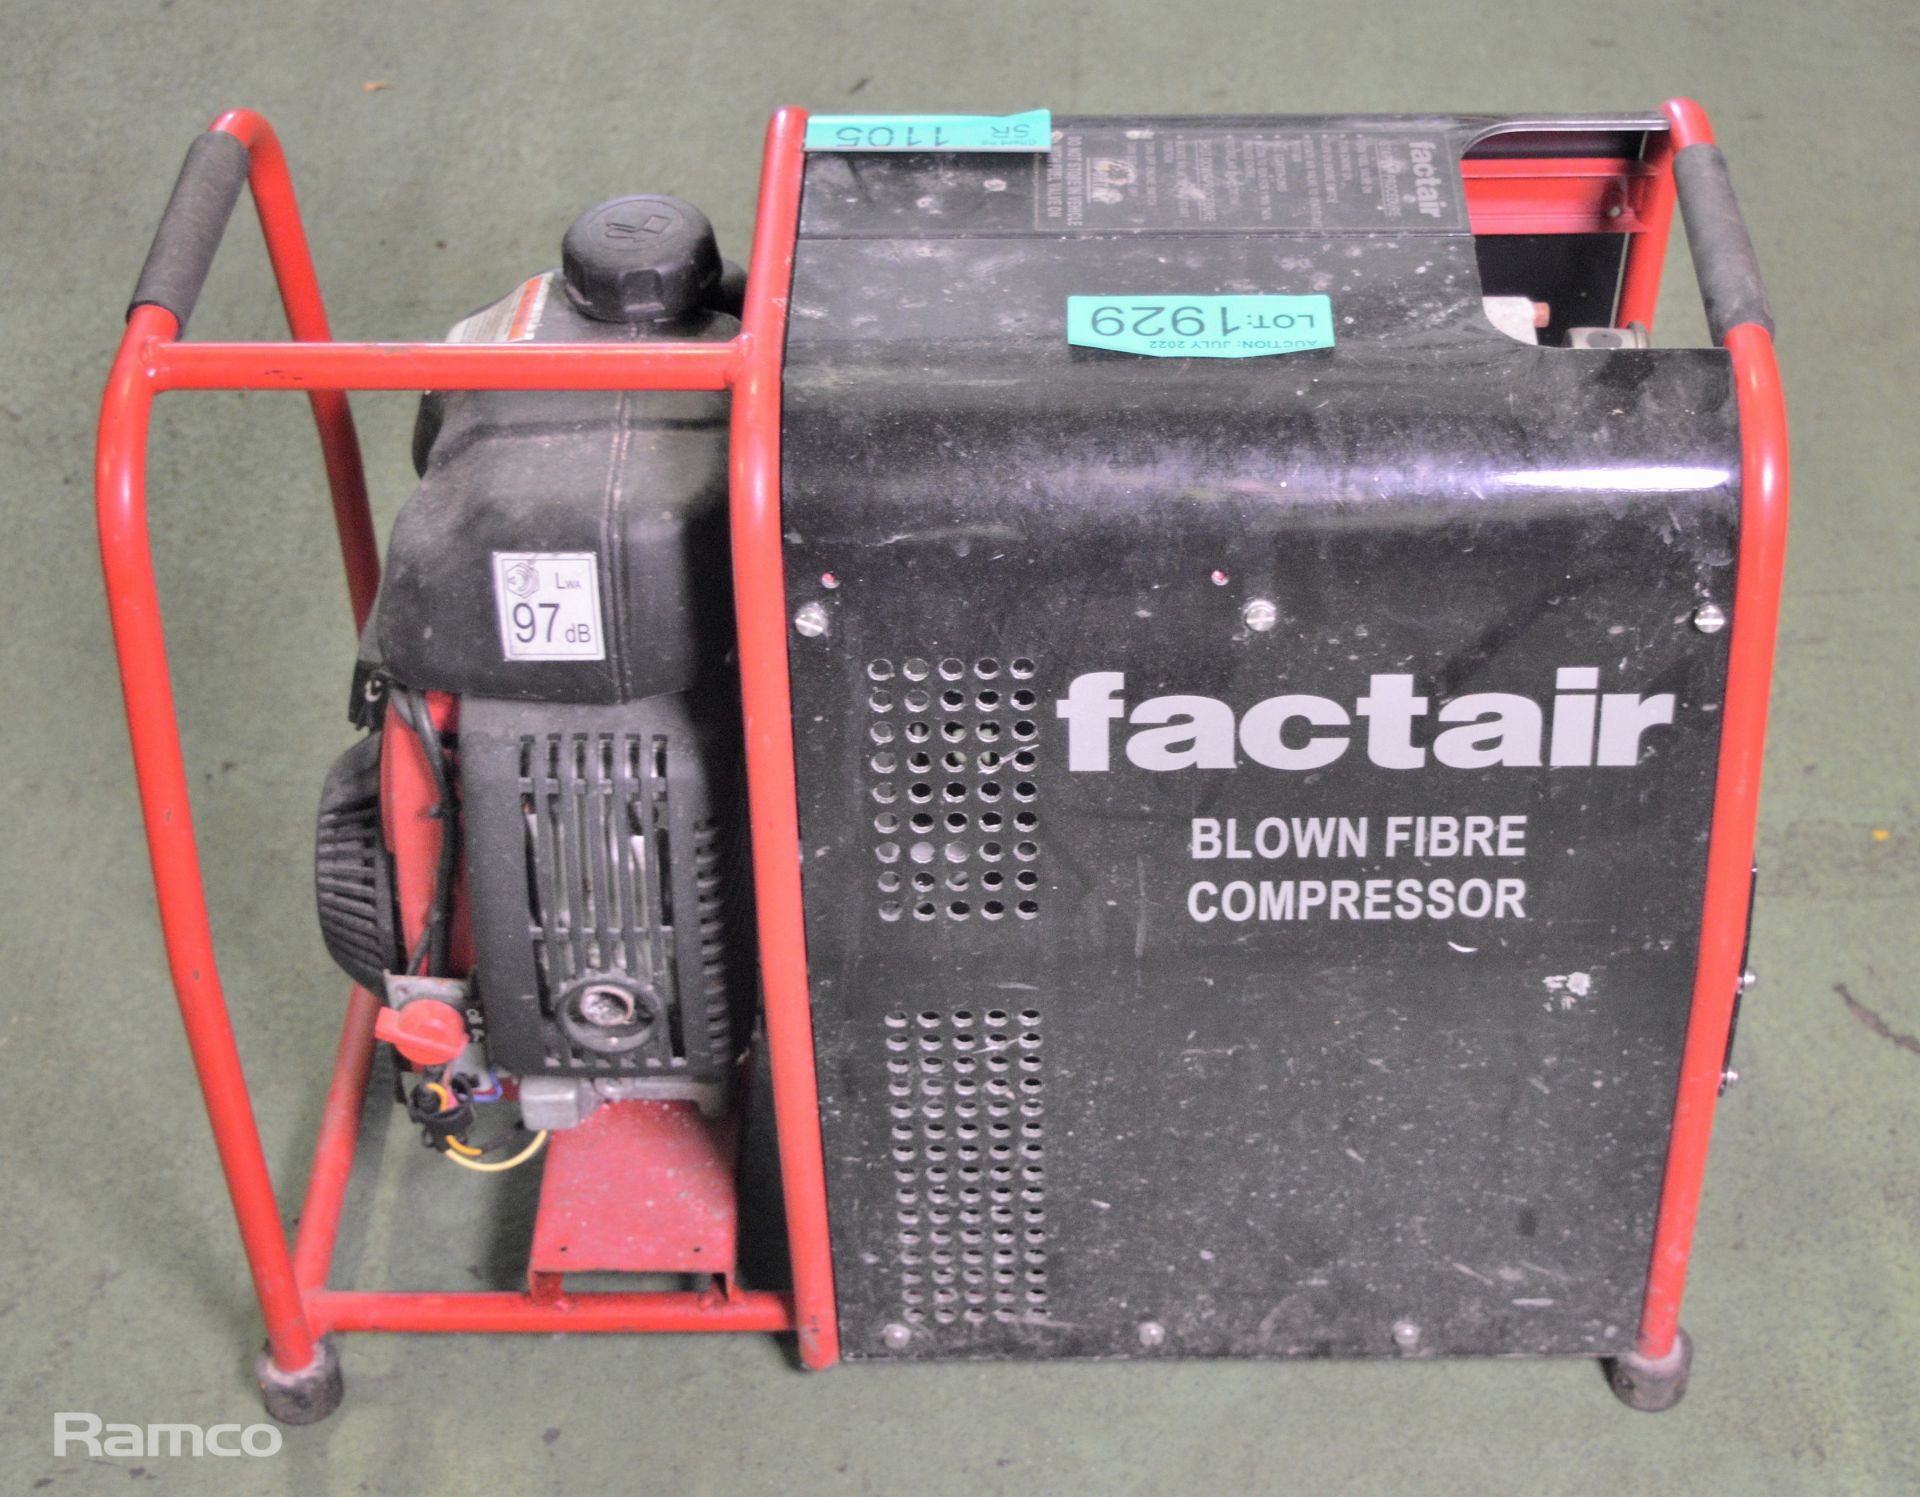 Factair blown fibre compressor with Honda GXH 50 engine - Image 3 of 7